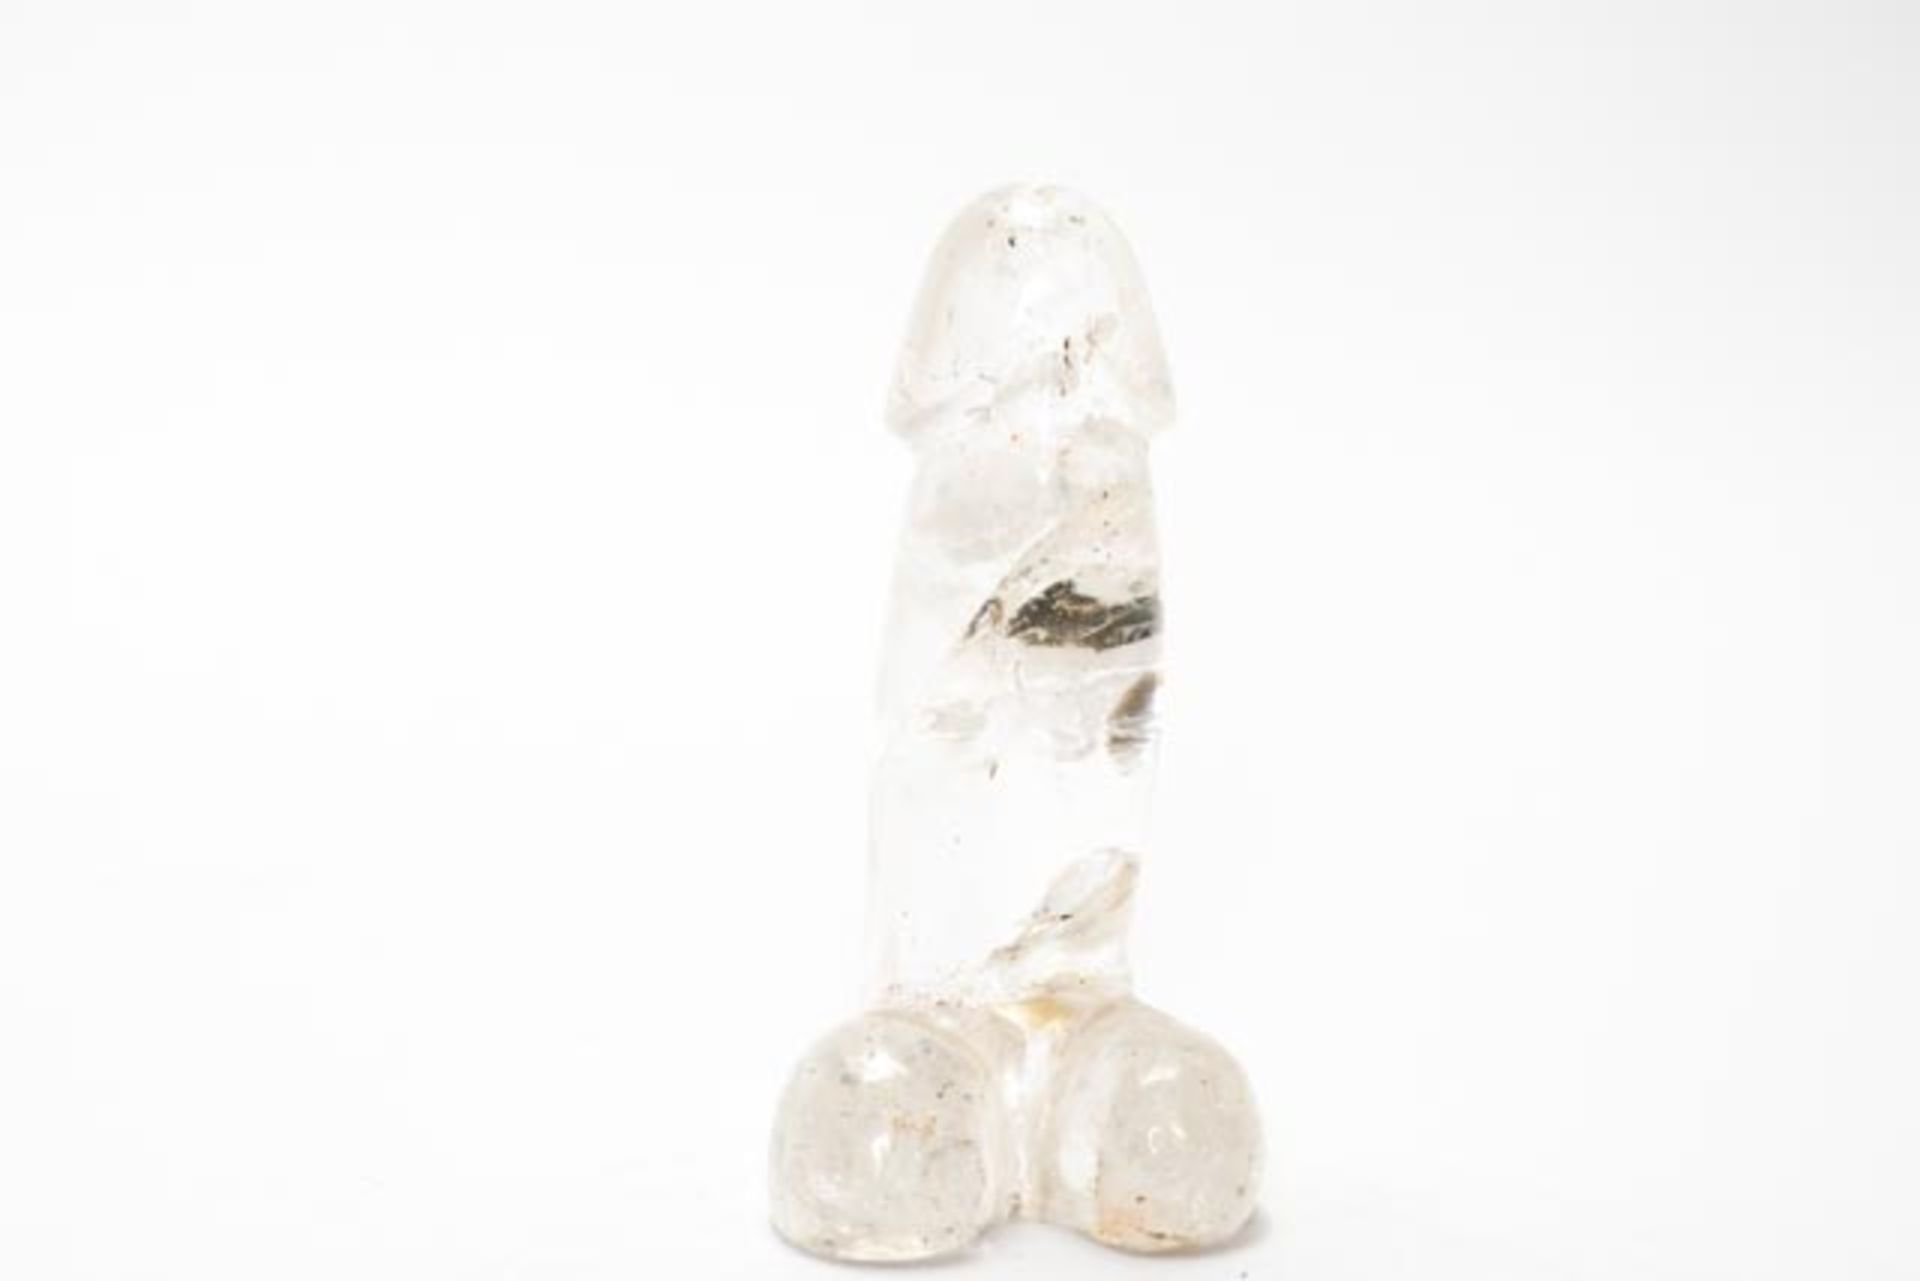 Bergkristall Phallus - Image 3 of 4